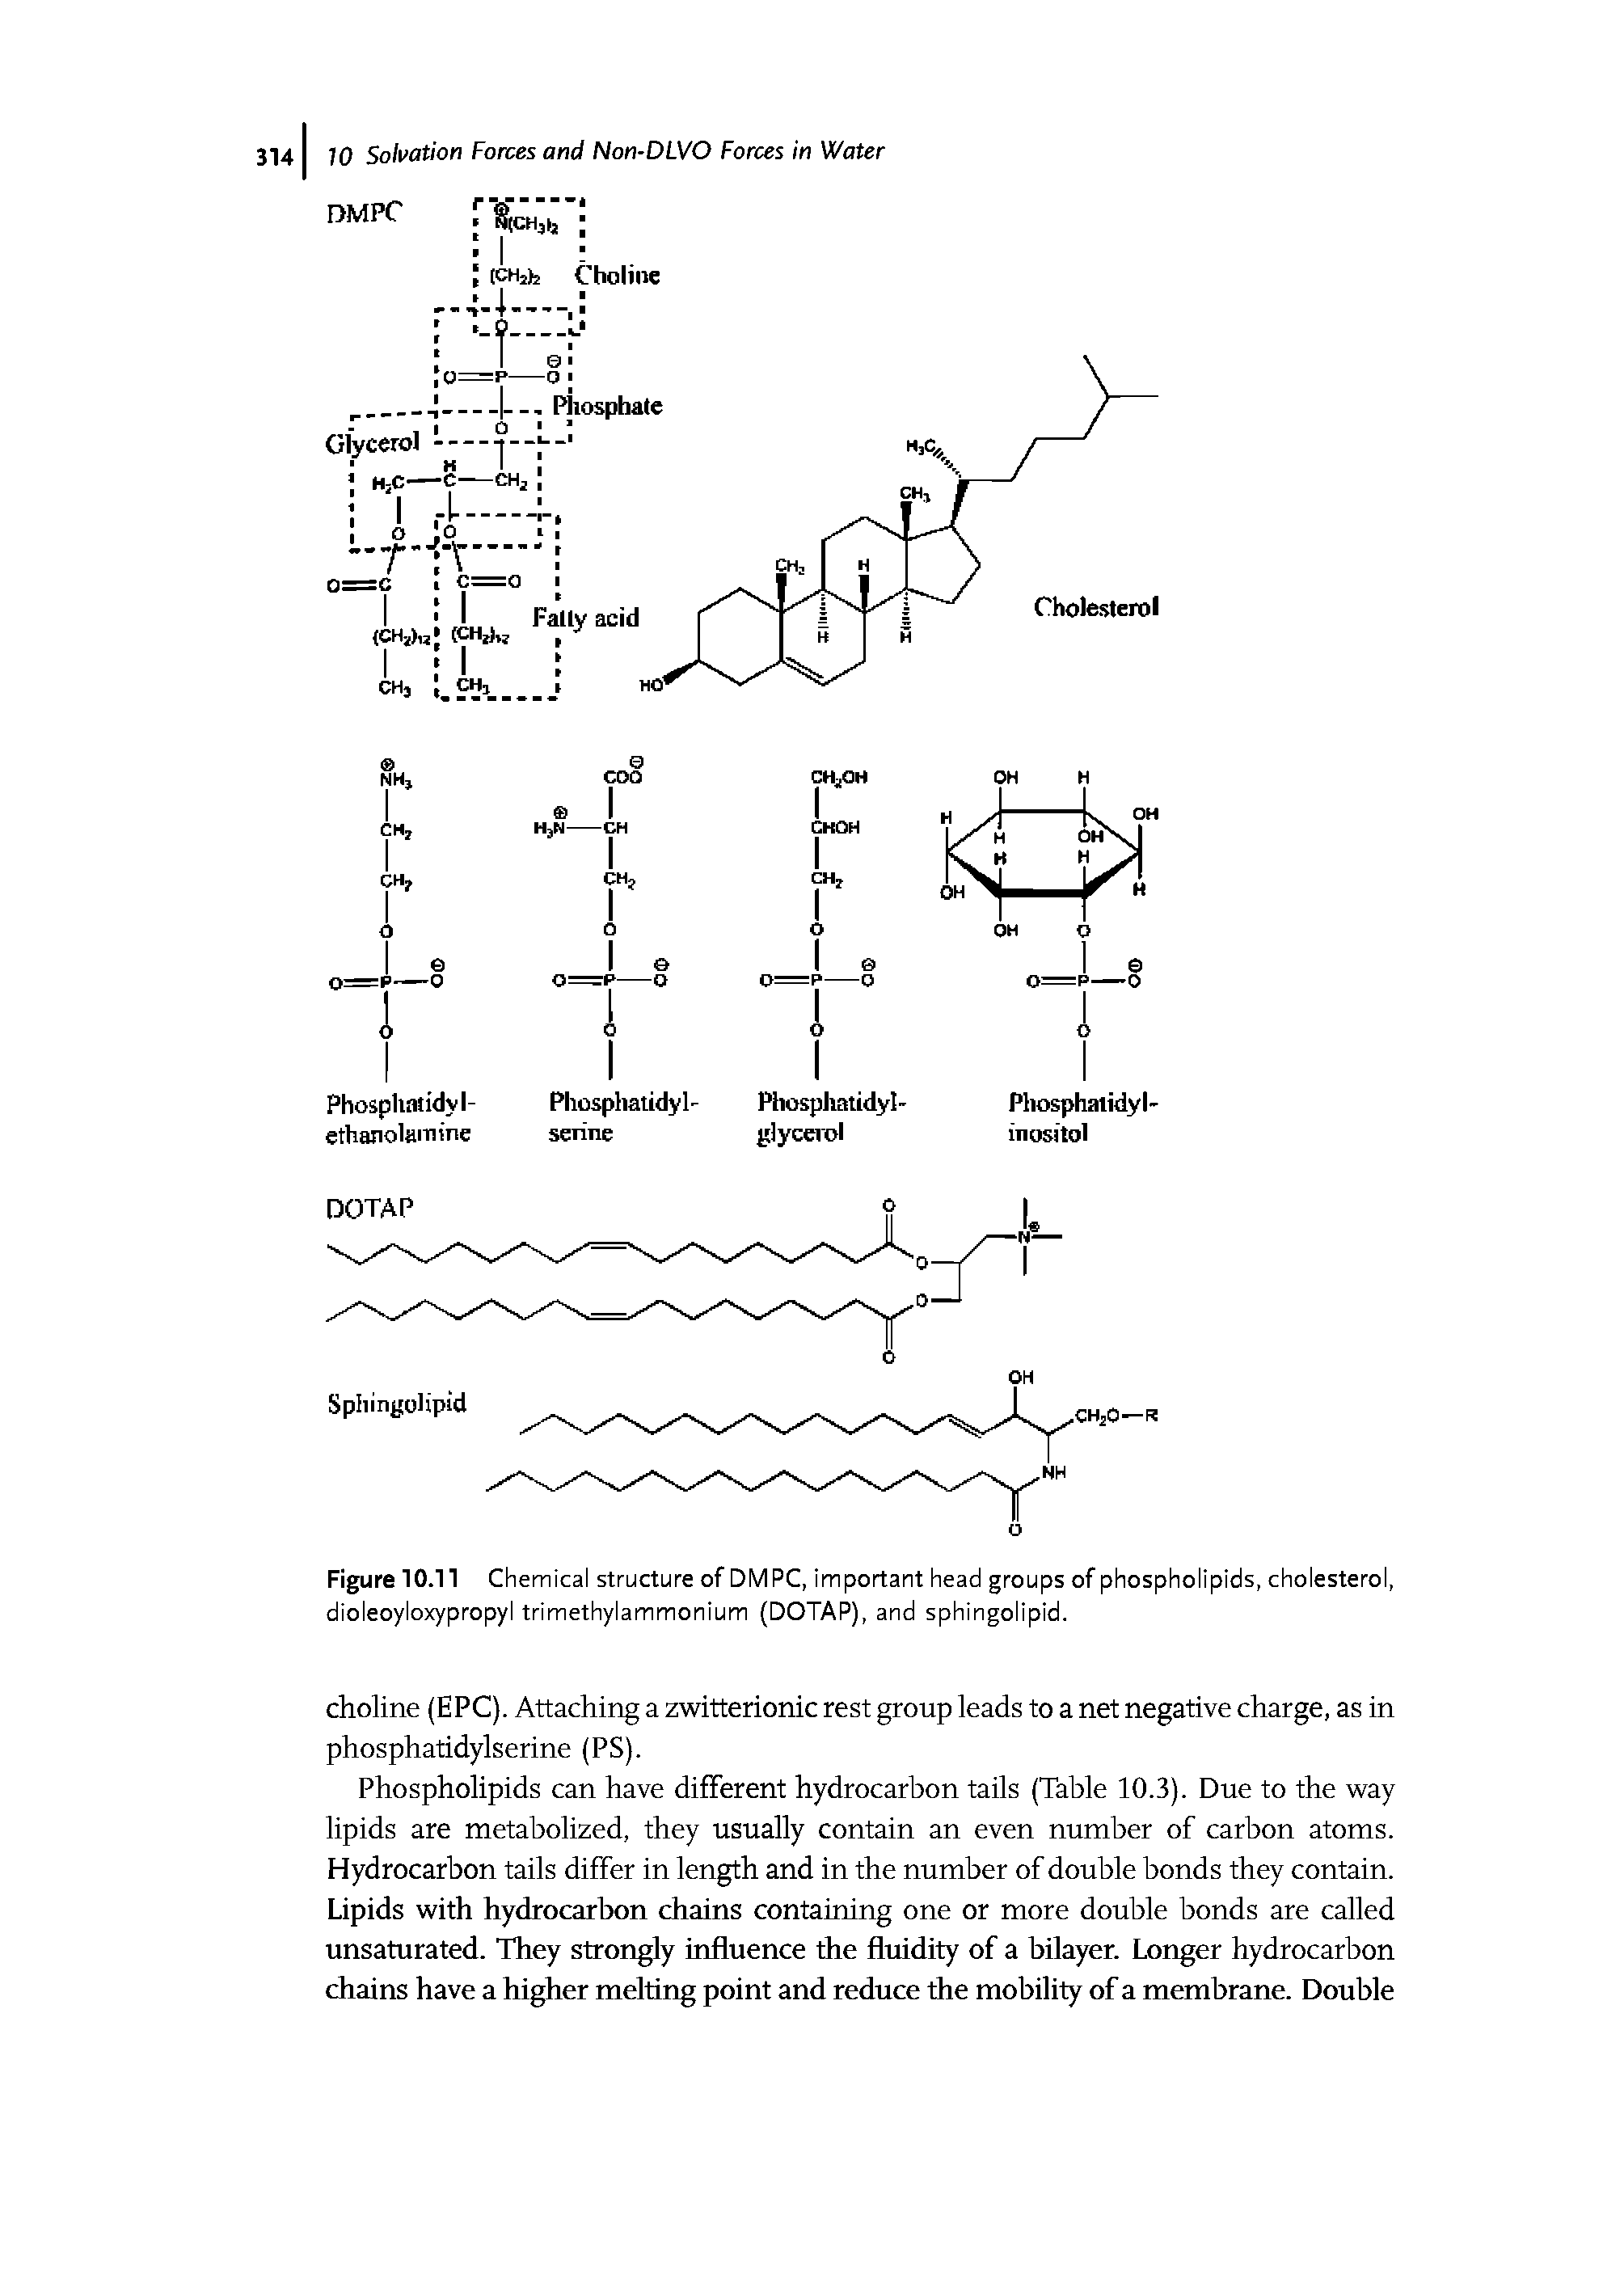 Figure 10.11 Chemical structure of DM PC, important head groups of phospholipids, cholesterol, dioleoyloxypropyl trimethylammonium (DOTAP), and sphingolipid.